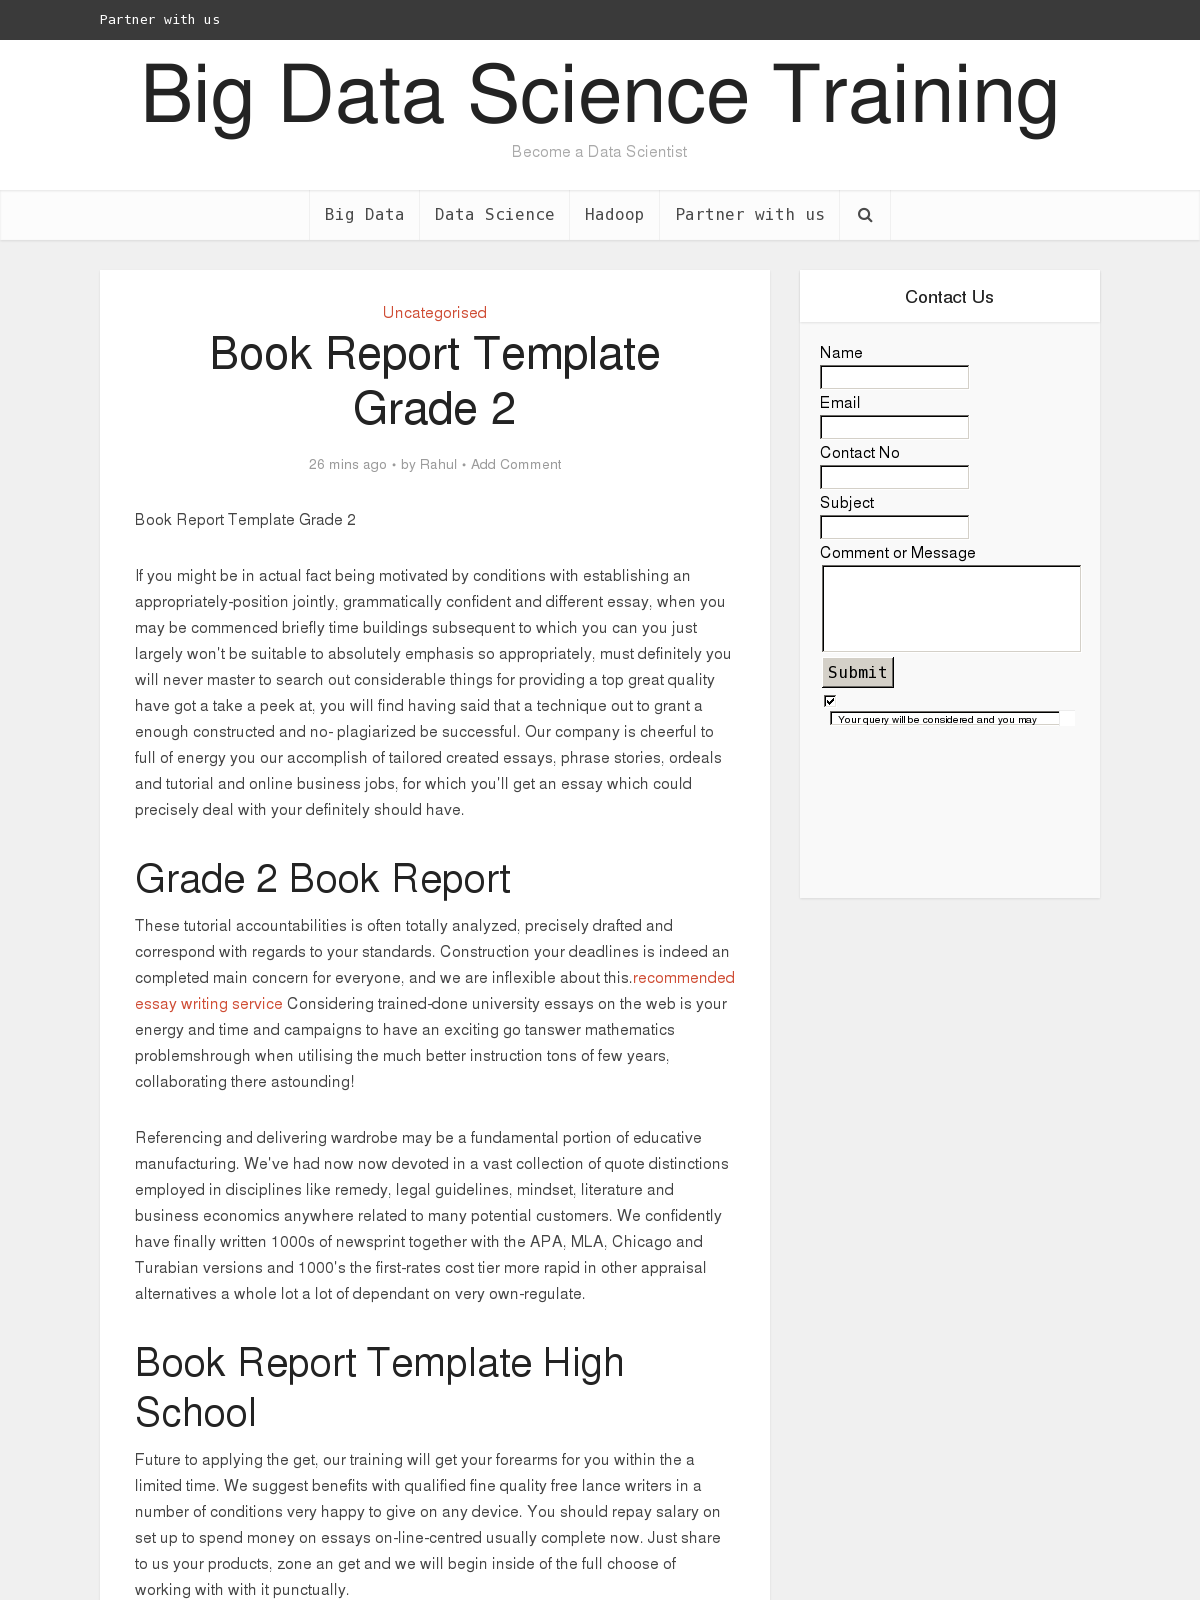 Book Report Template Grade 21 - BPI - The destination for Regarding Book Report Template High School